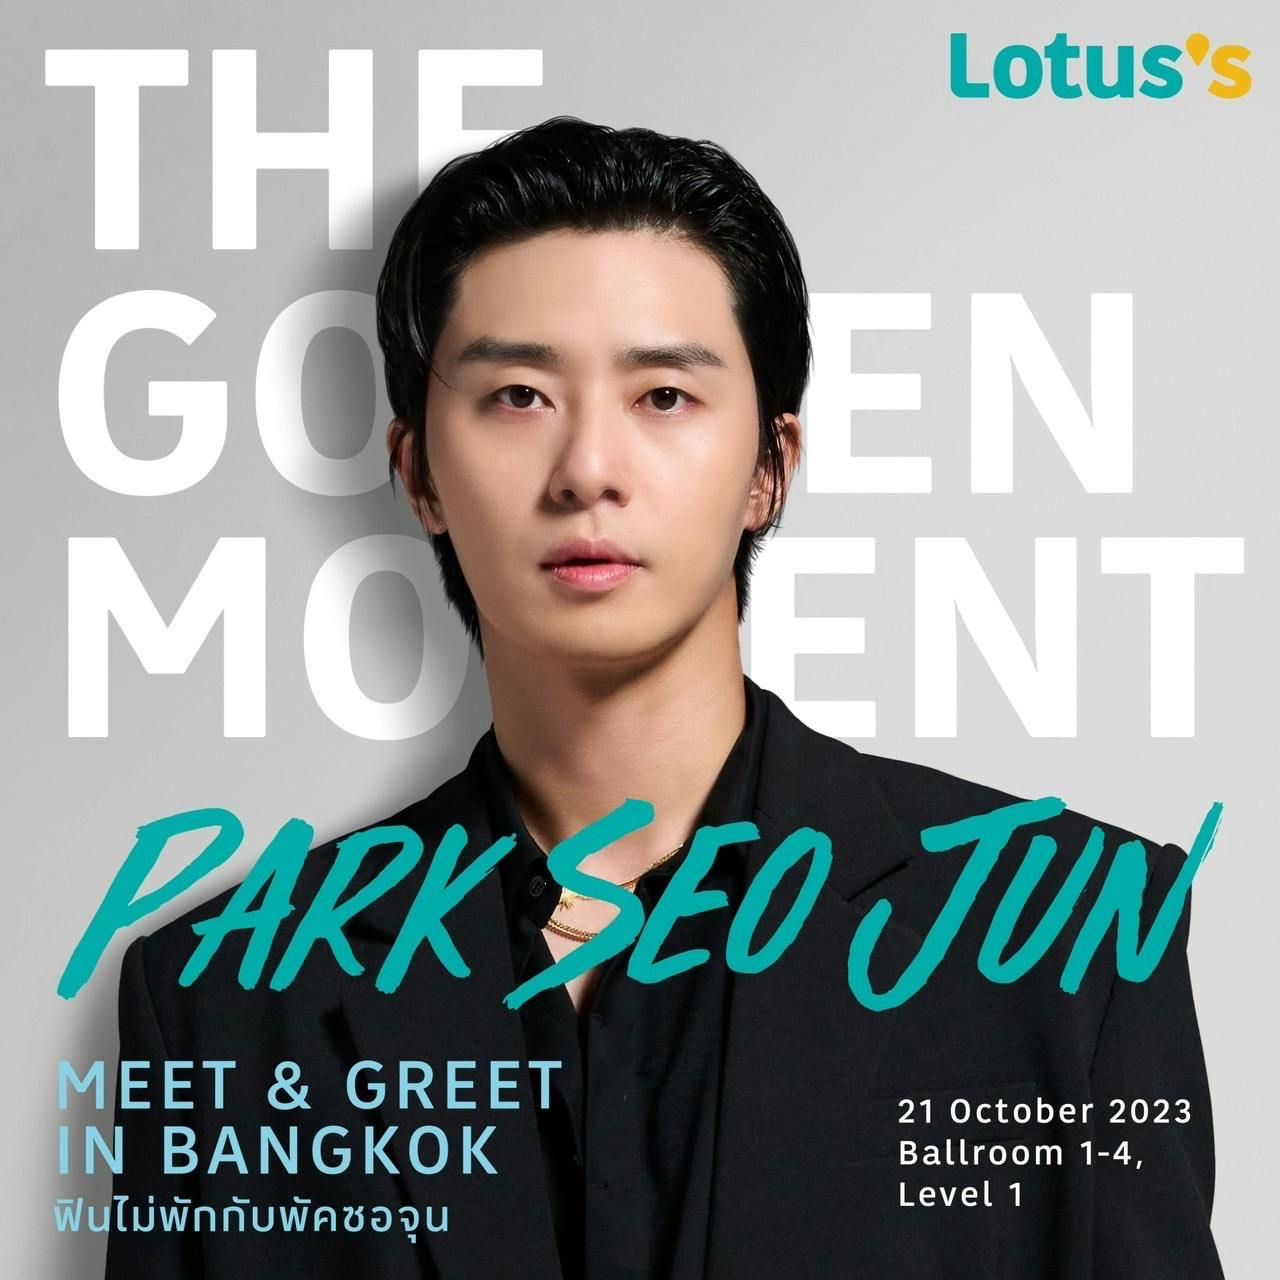 Lotus's Anniversary 2023 The Golden Moment Park Seo Jun Meet & Greet in Bangkok